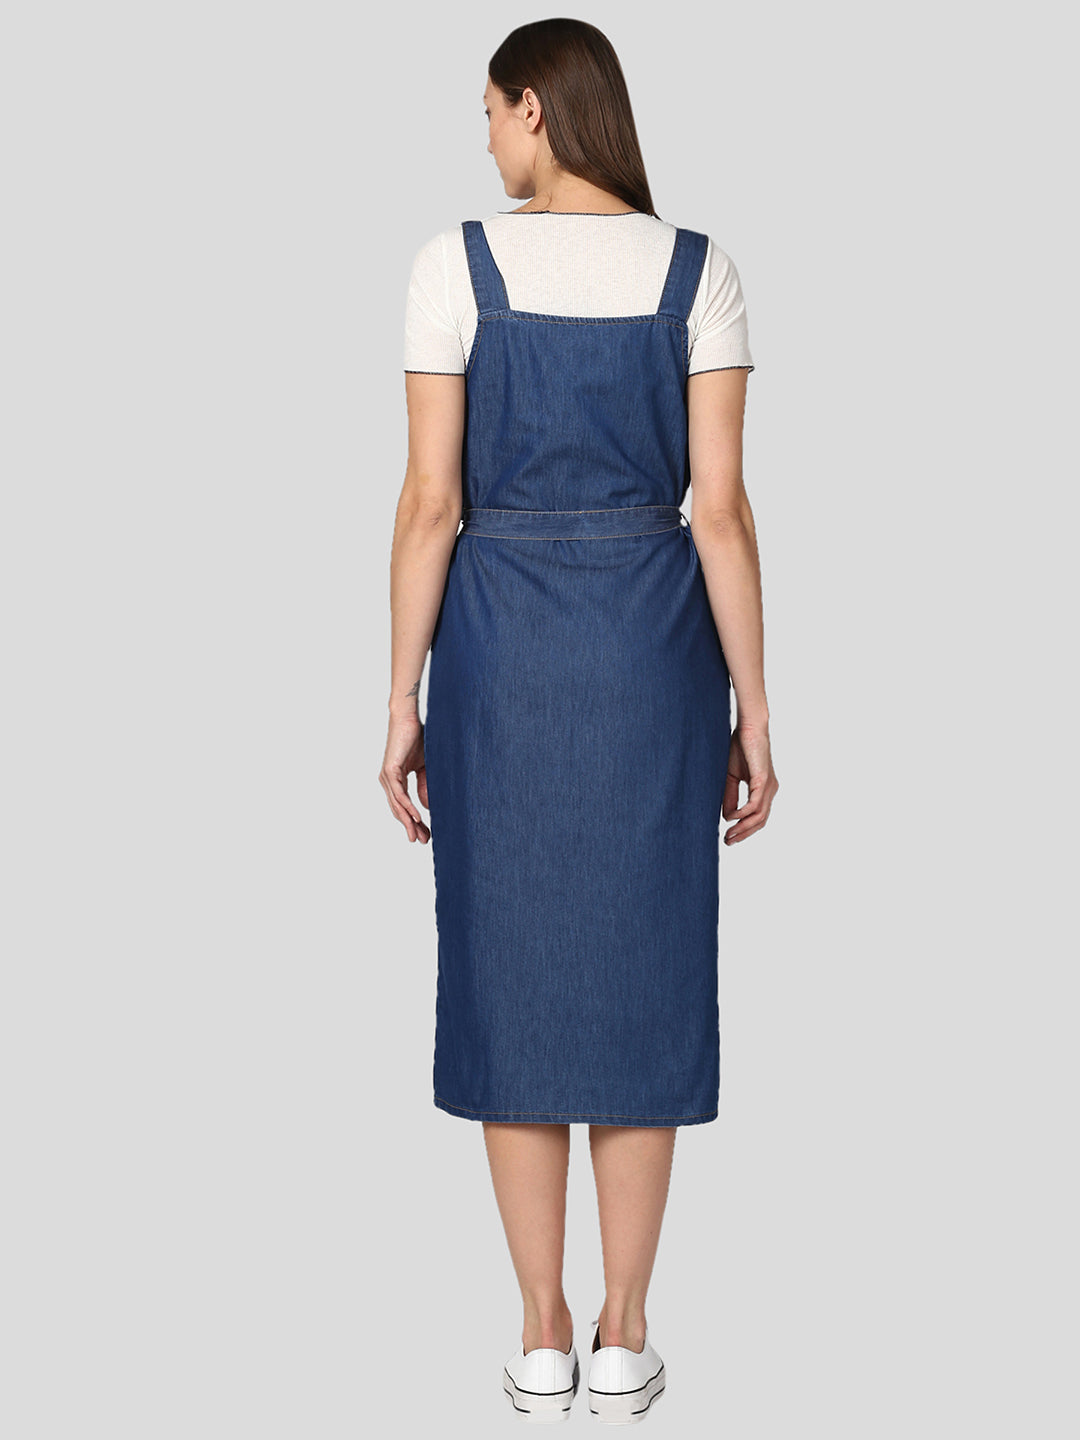 Women's Navy Blue Denim Dress with Straps (inner not included)